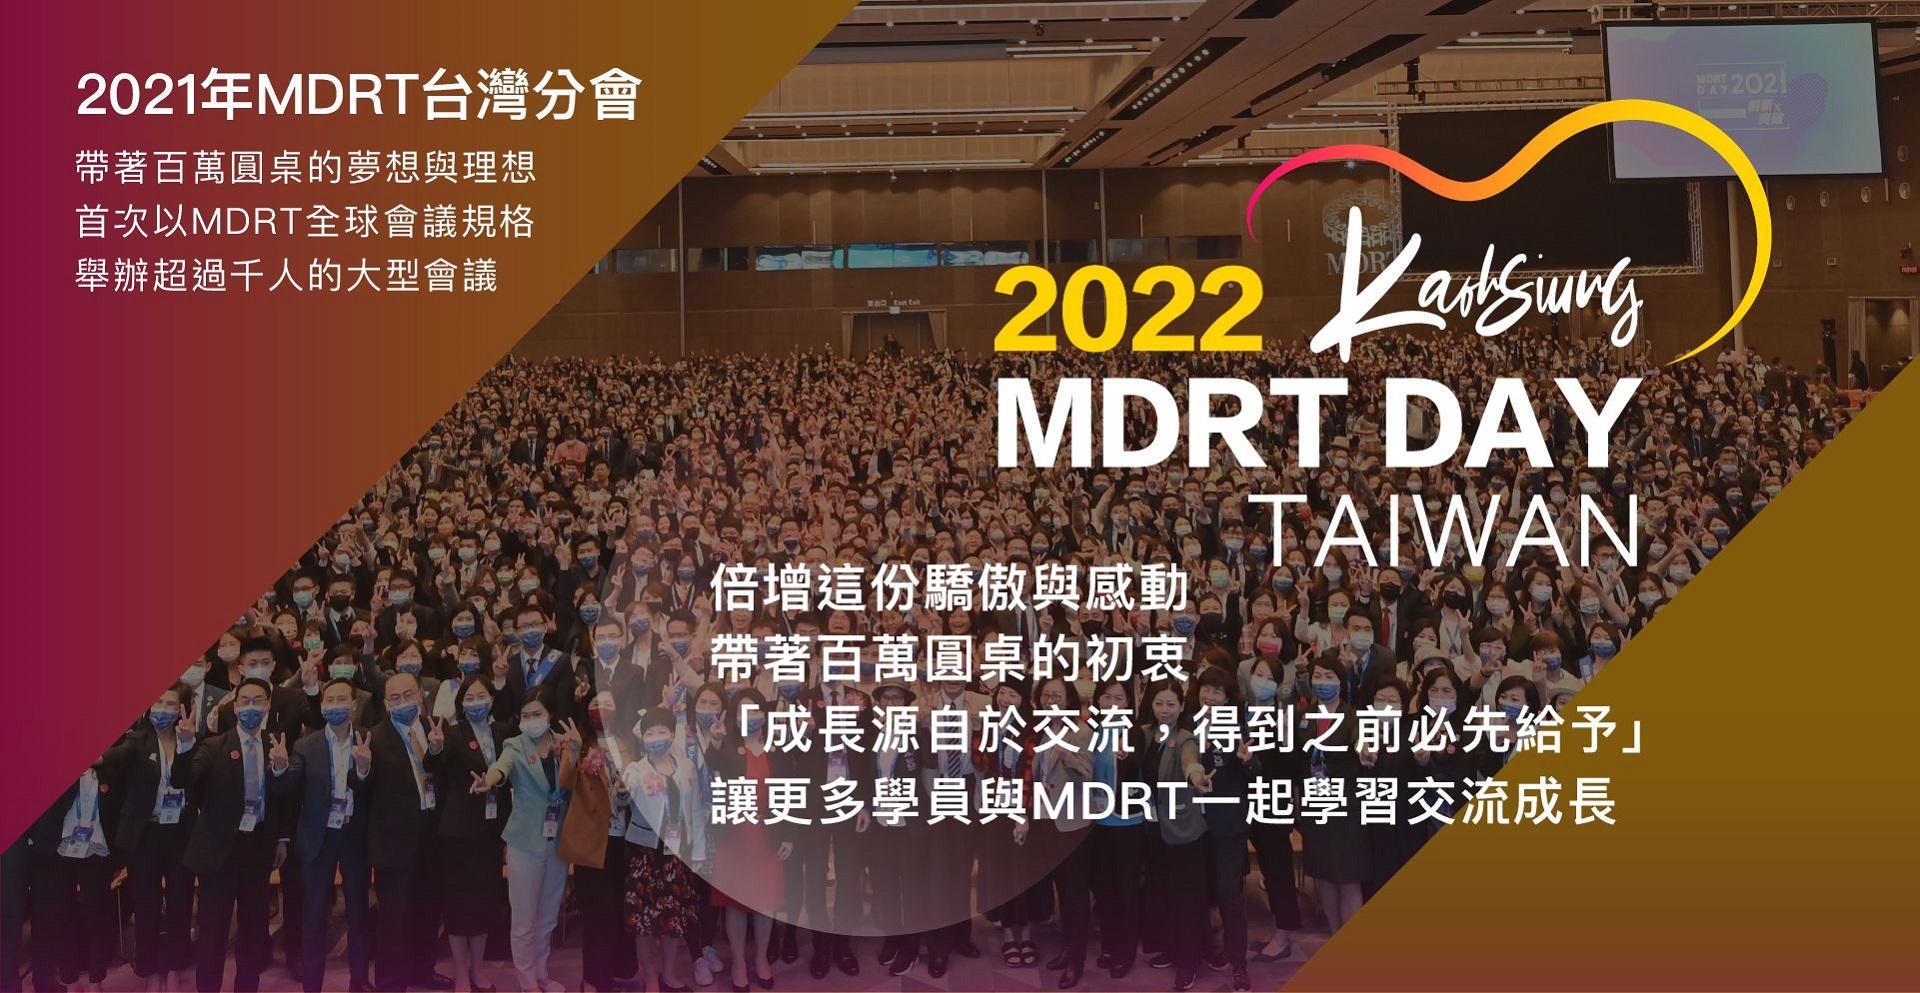 2022 MDRT DAY TAIWAN 講師推薦